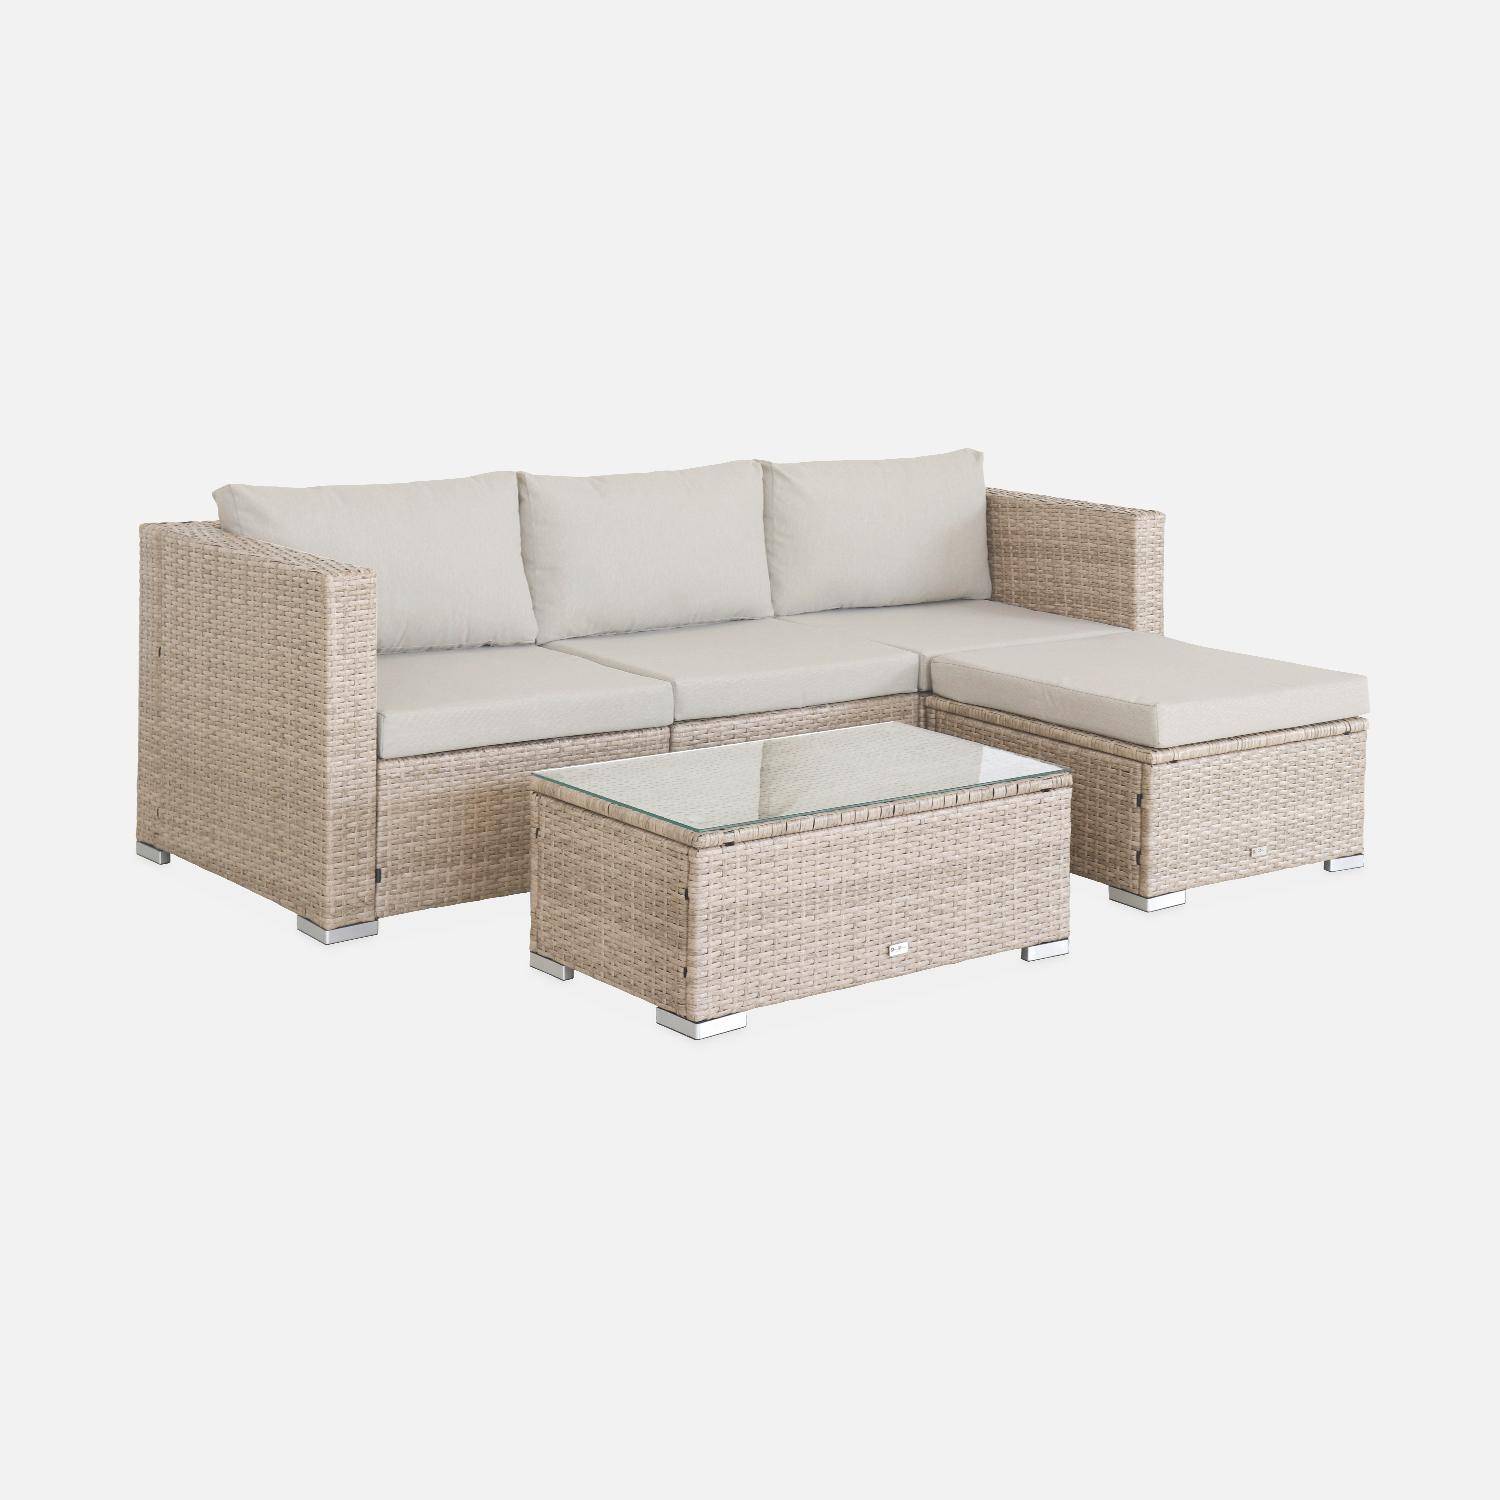 Set di mobili da giardino in resina per 4 persone - Torino - resina naturale e cuscini beige Photo3